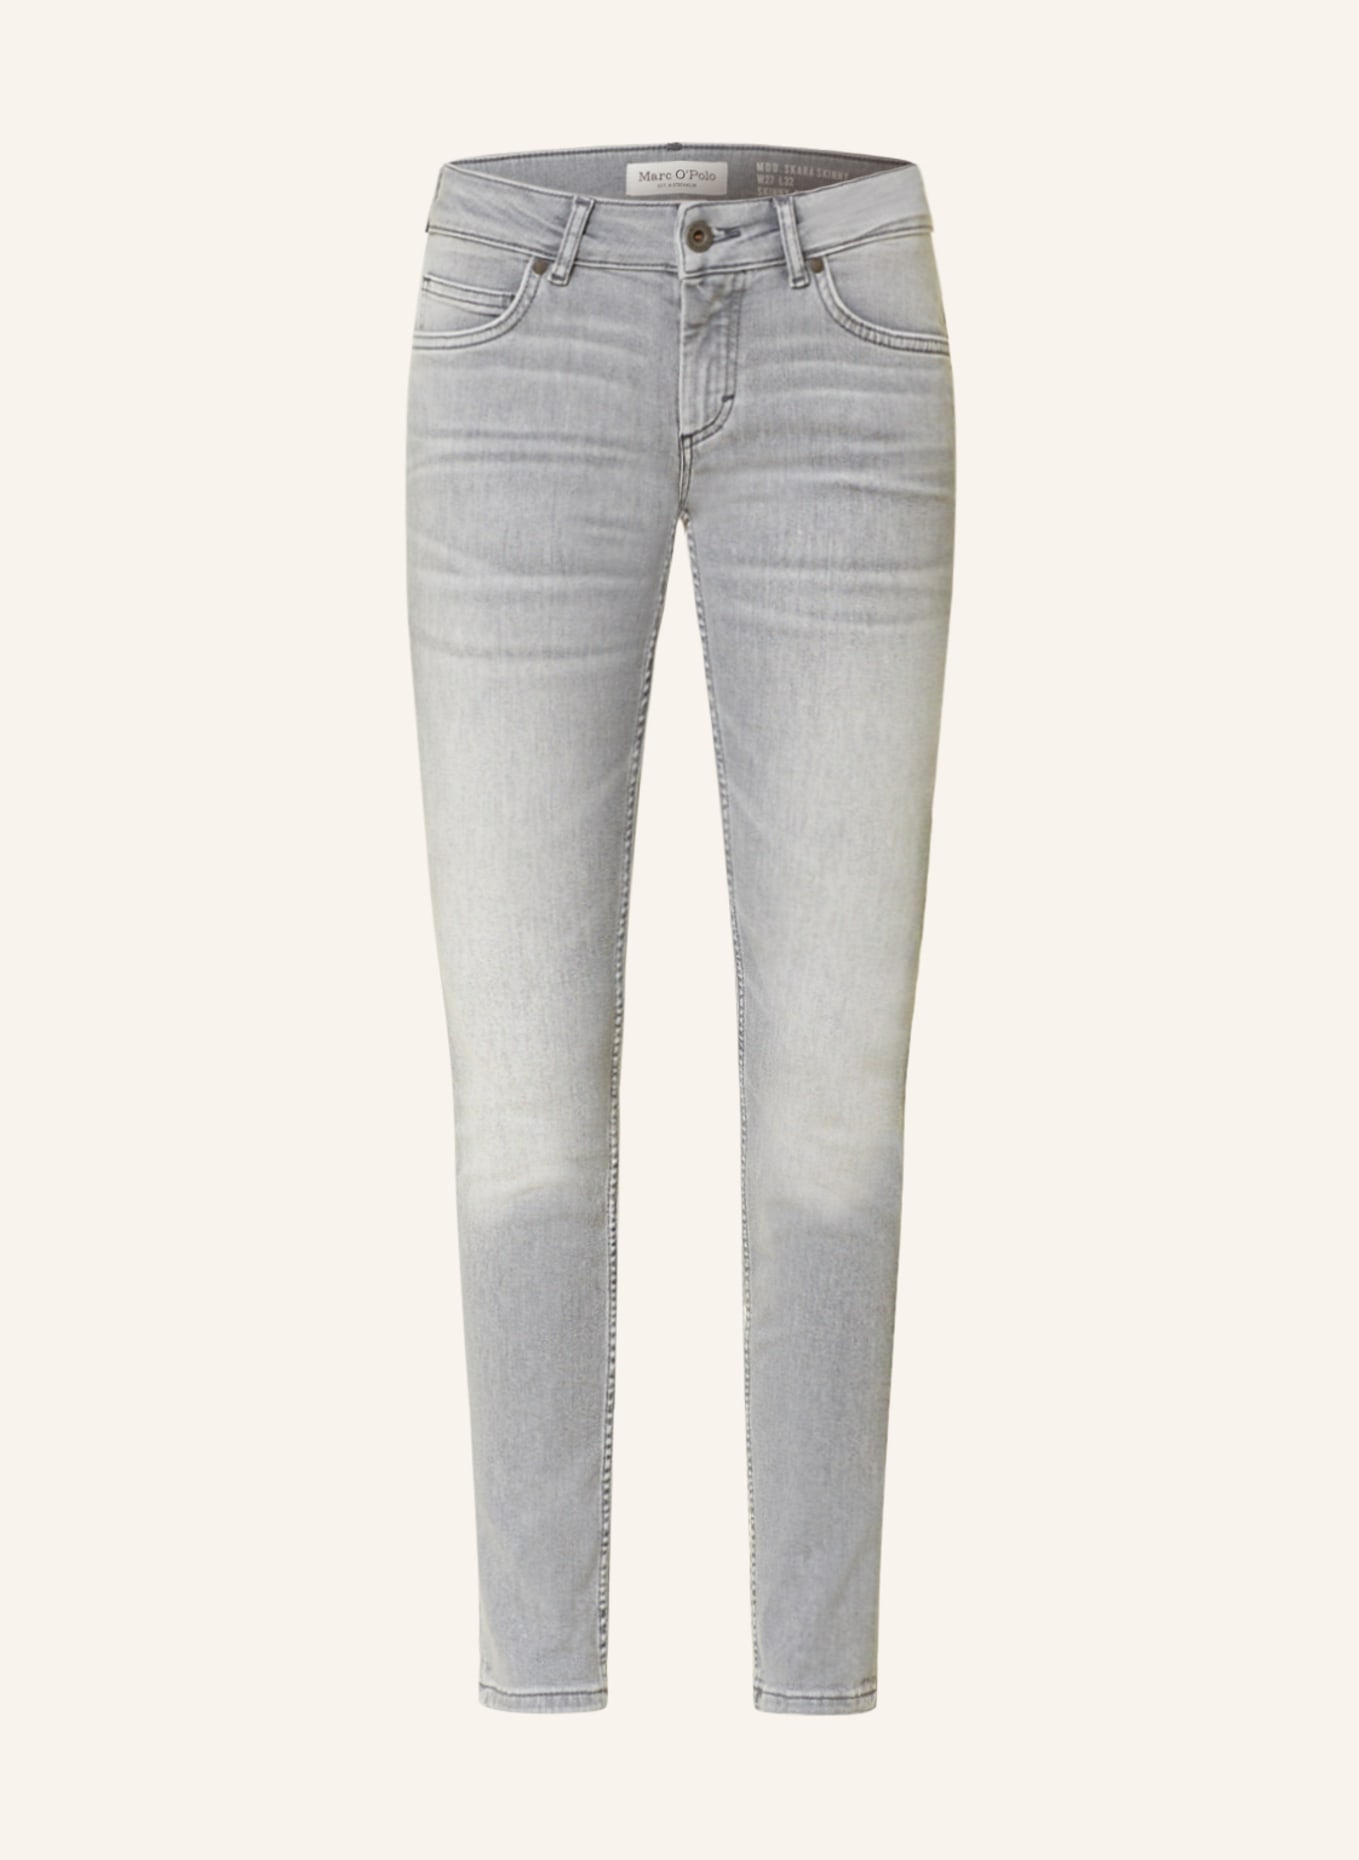 Marc O'Polo Skinny Jeans, Farbe: 007 Comfort light grey wash (Bild 1)